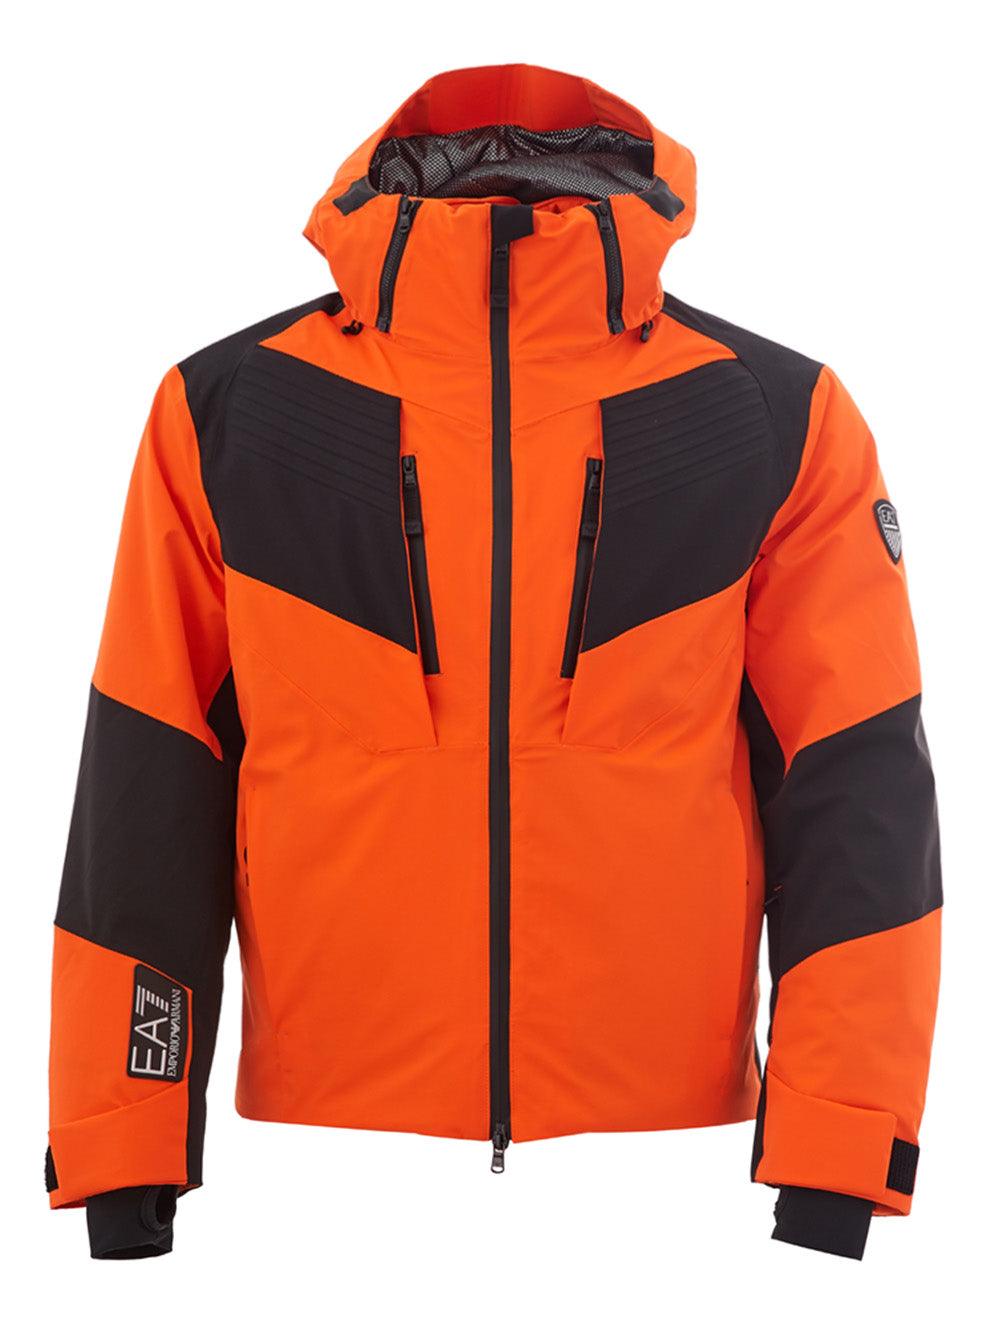 EA7 Emporio Armani Neon Orange Quilted Technical Jacket - Ellie Belle